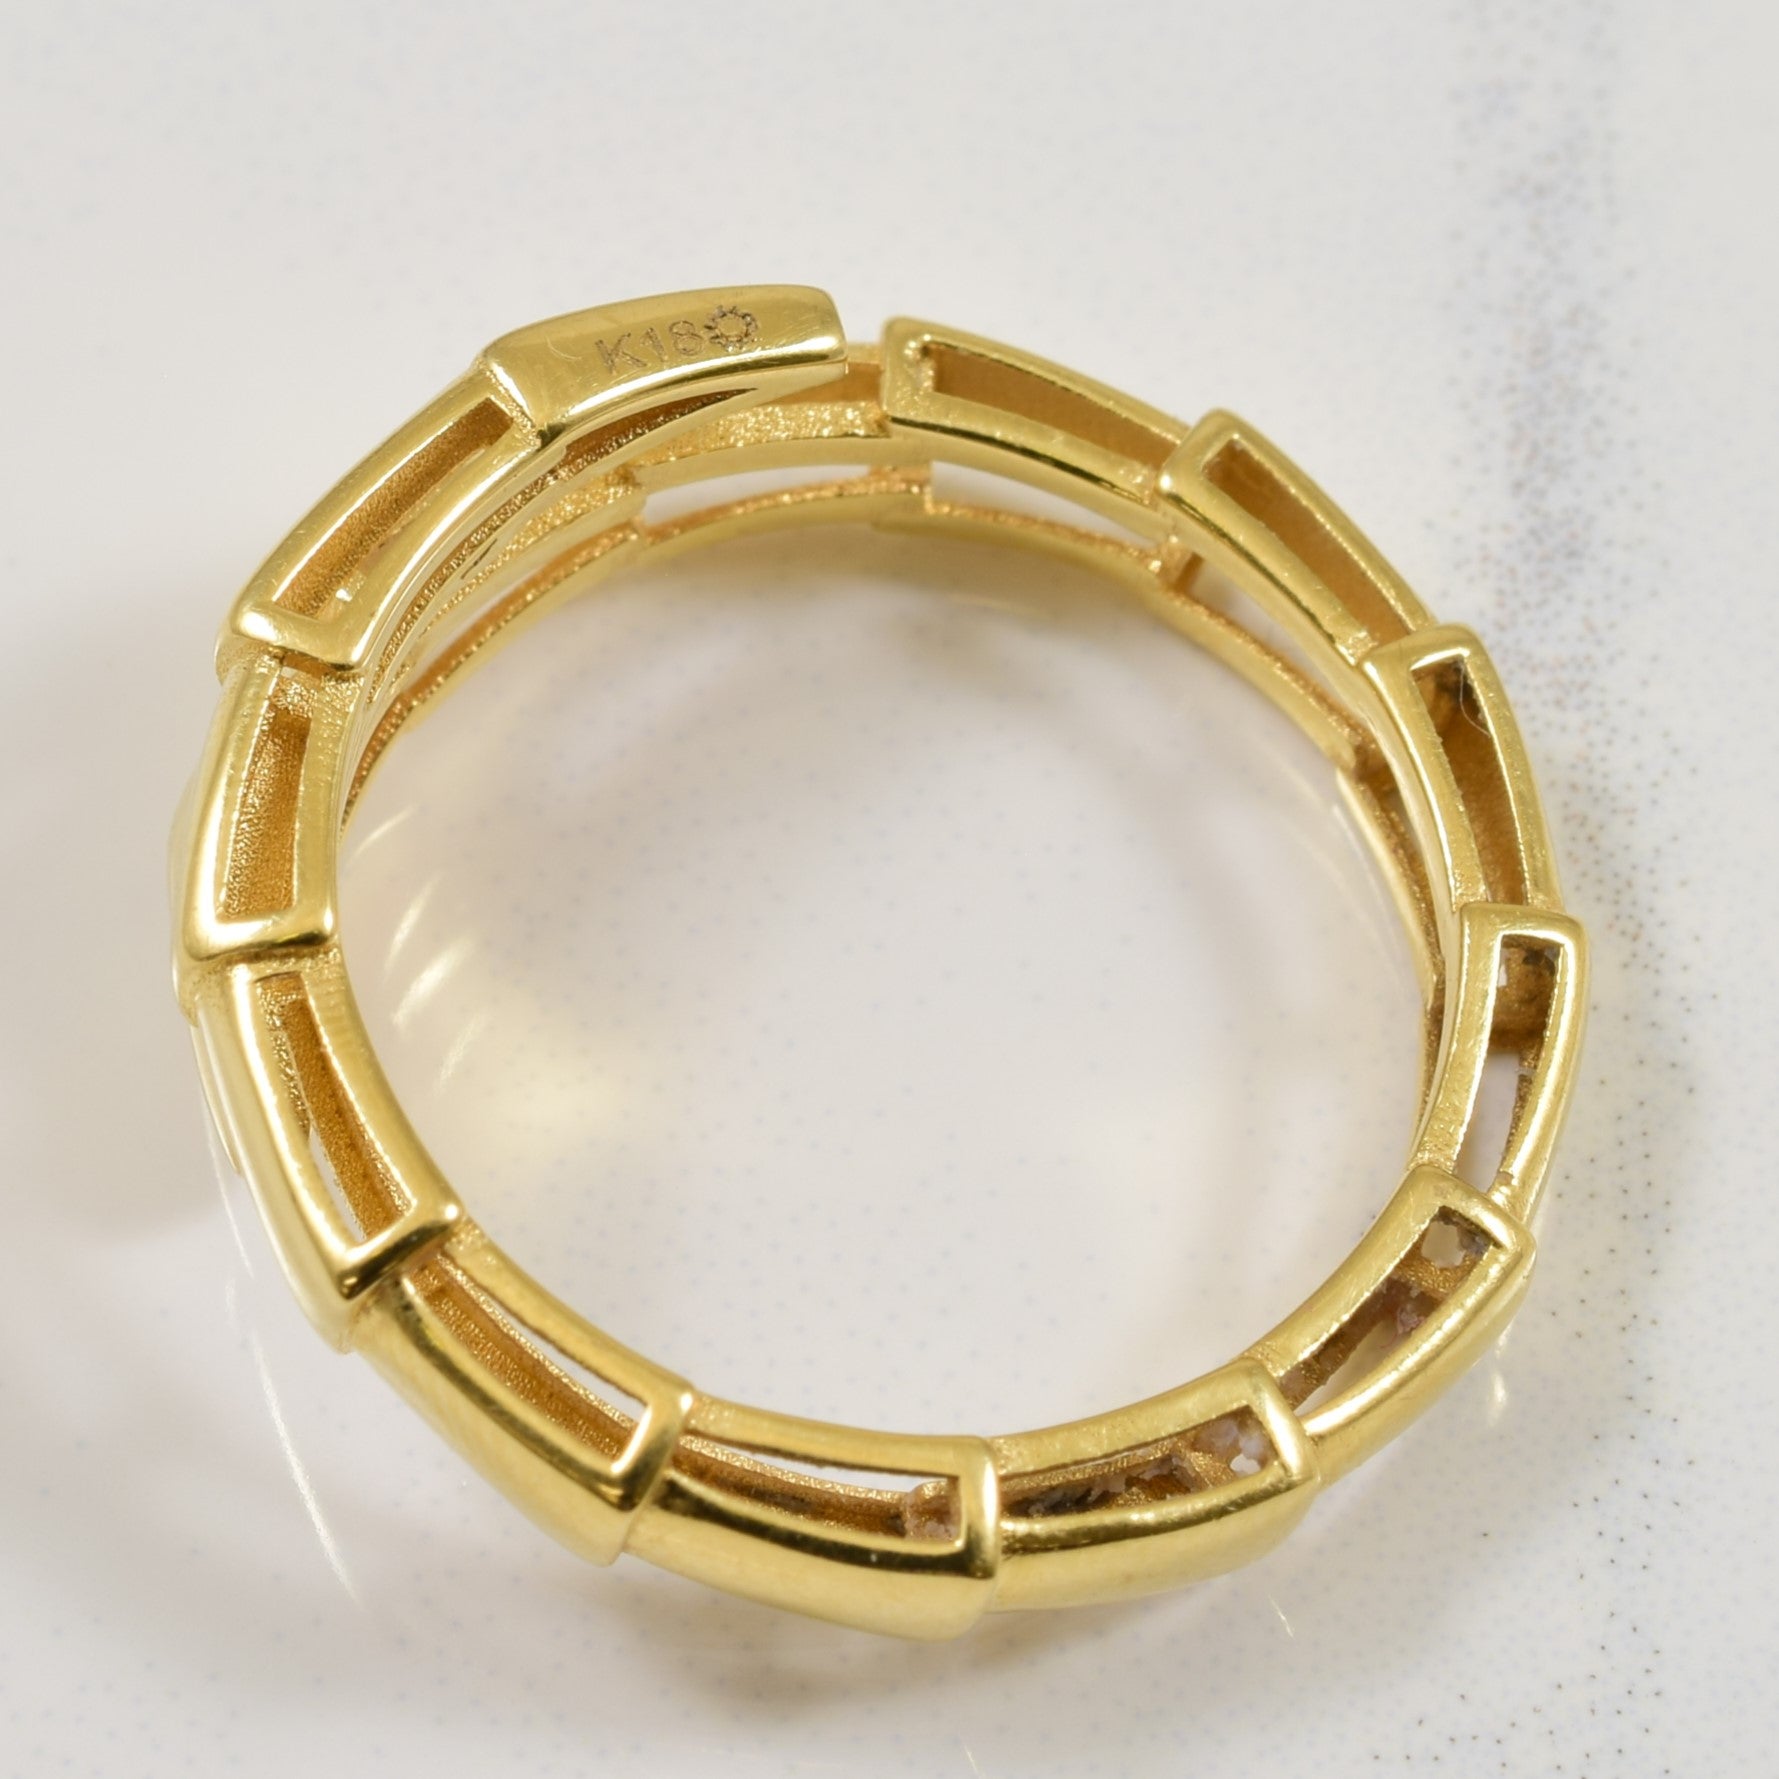 18k Yellow Gold Bypass Snake Ring | SZ 7.5 |